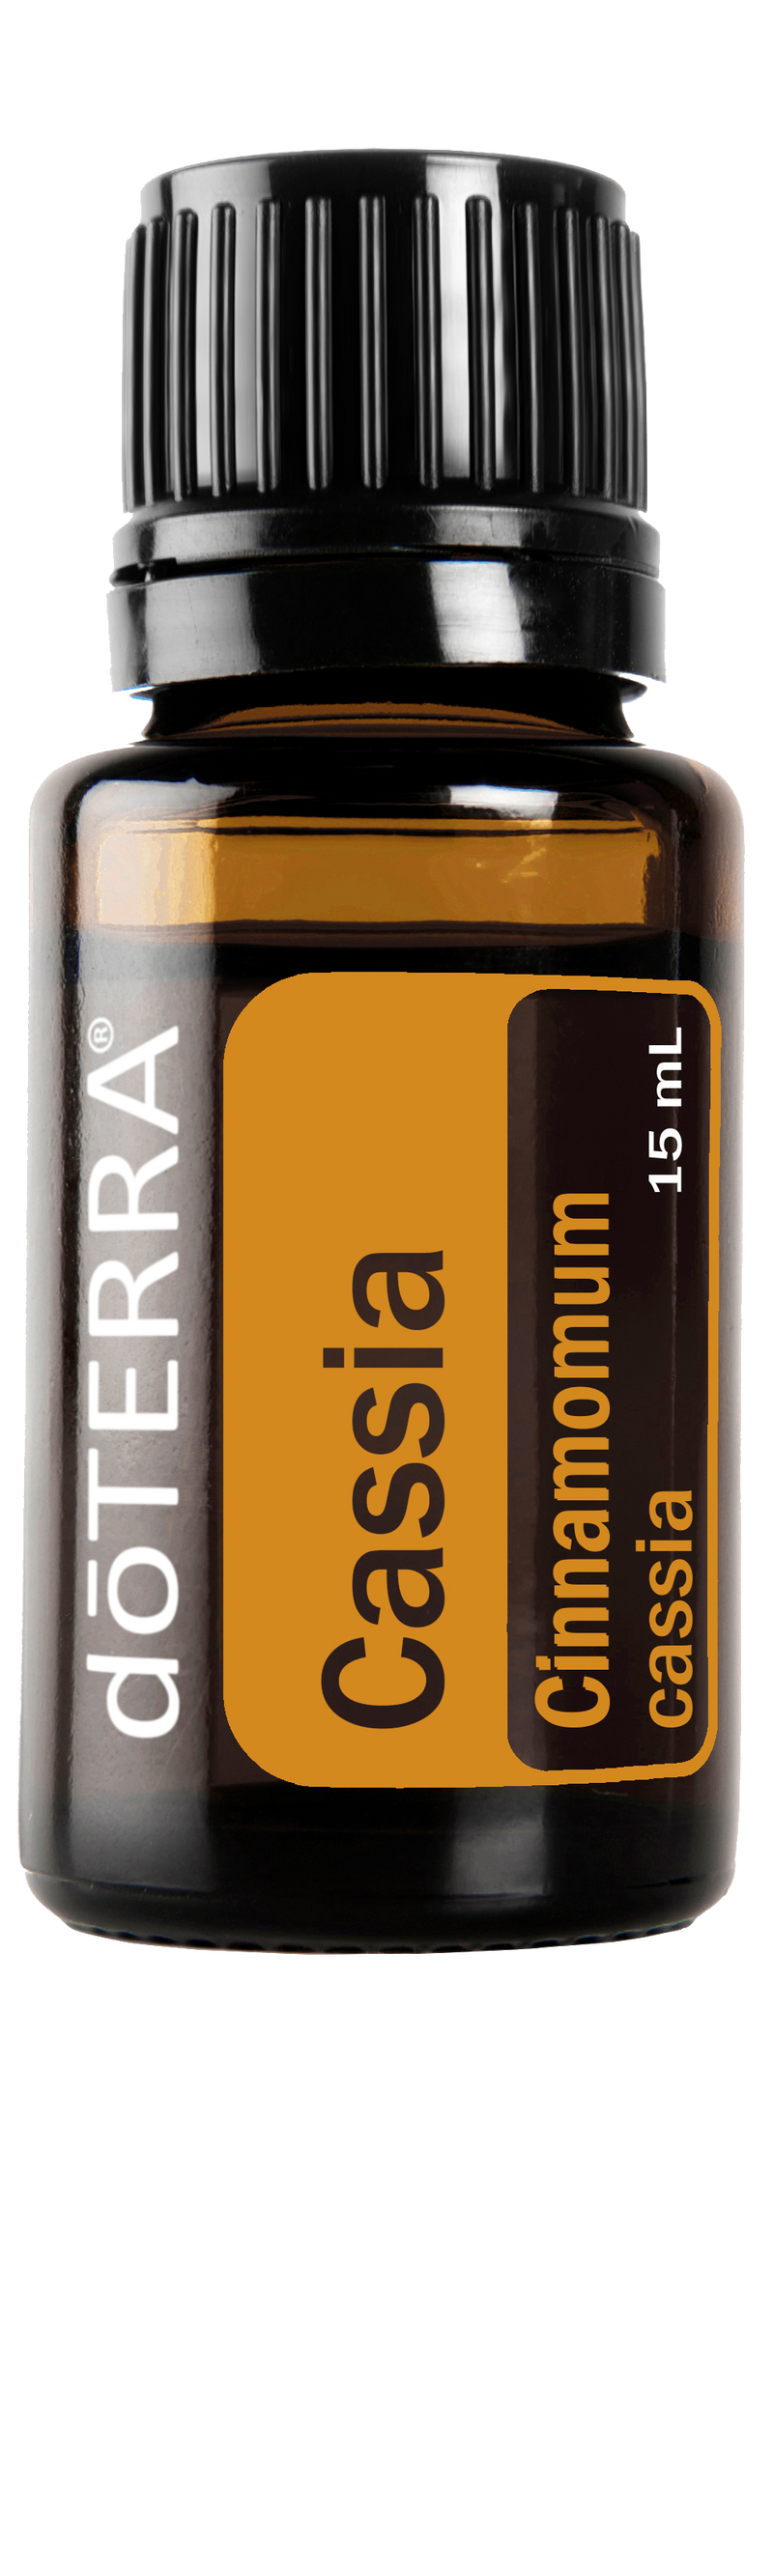 CASSIA OIL - dōTERRA Essential Oils